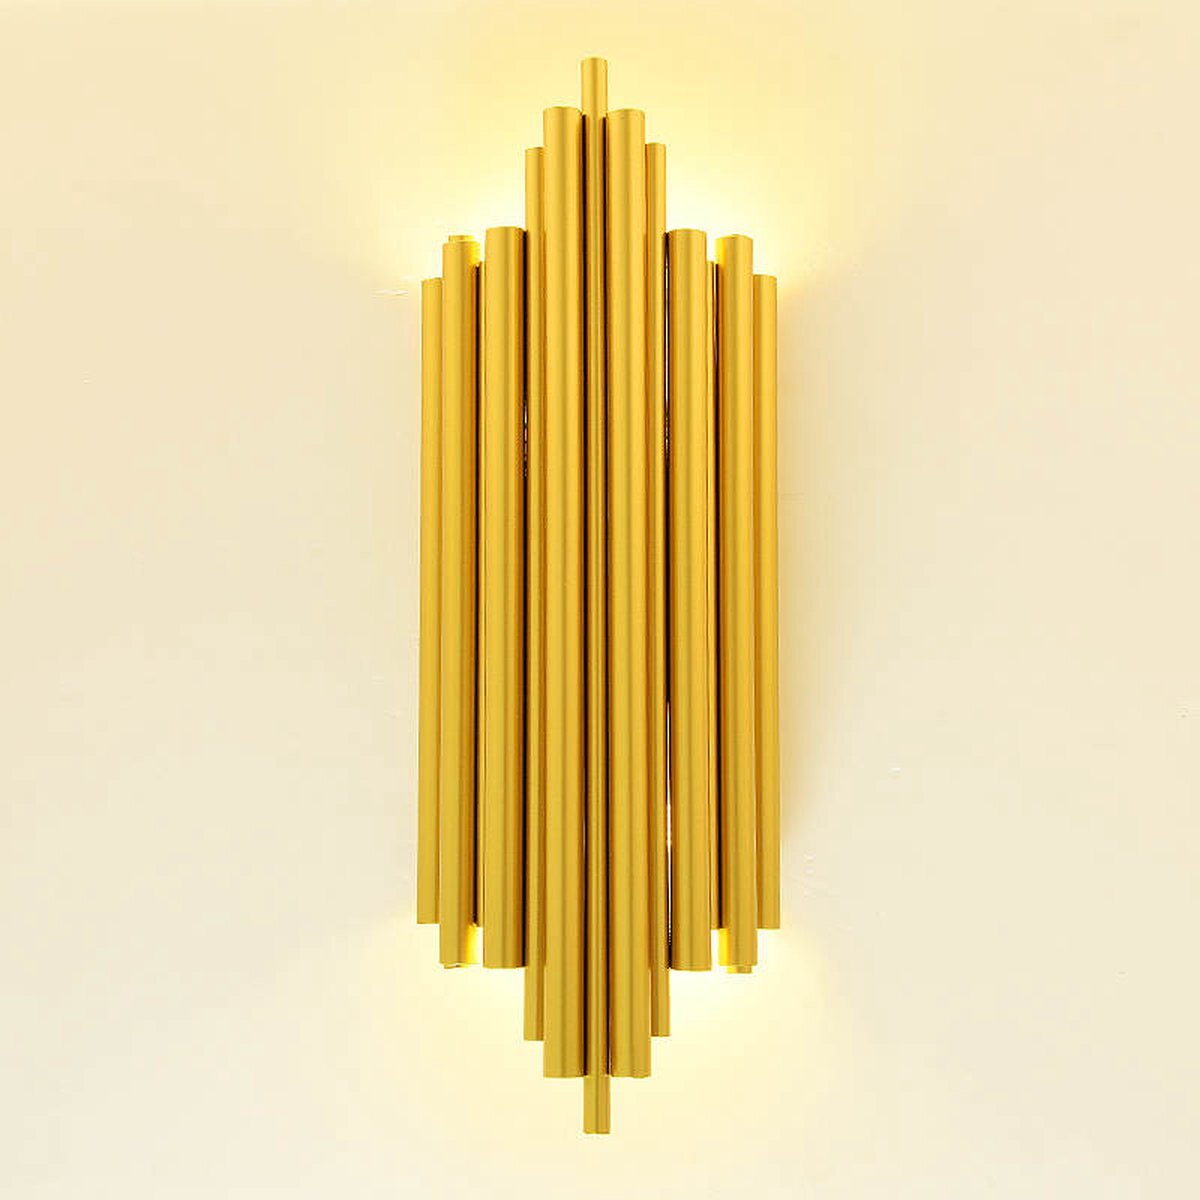 Cahaya Orgel| Wandlamp | 2022 model | goud | LED verlichting | inclusief 4 lichten